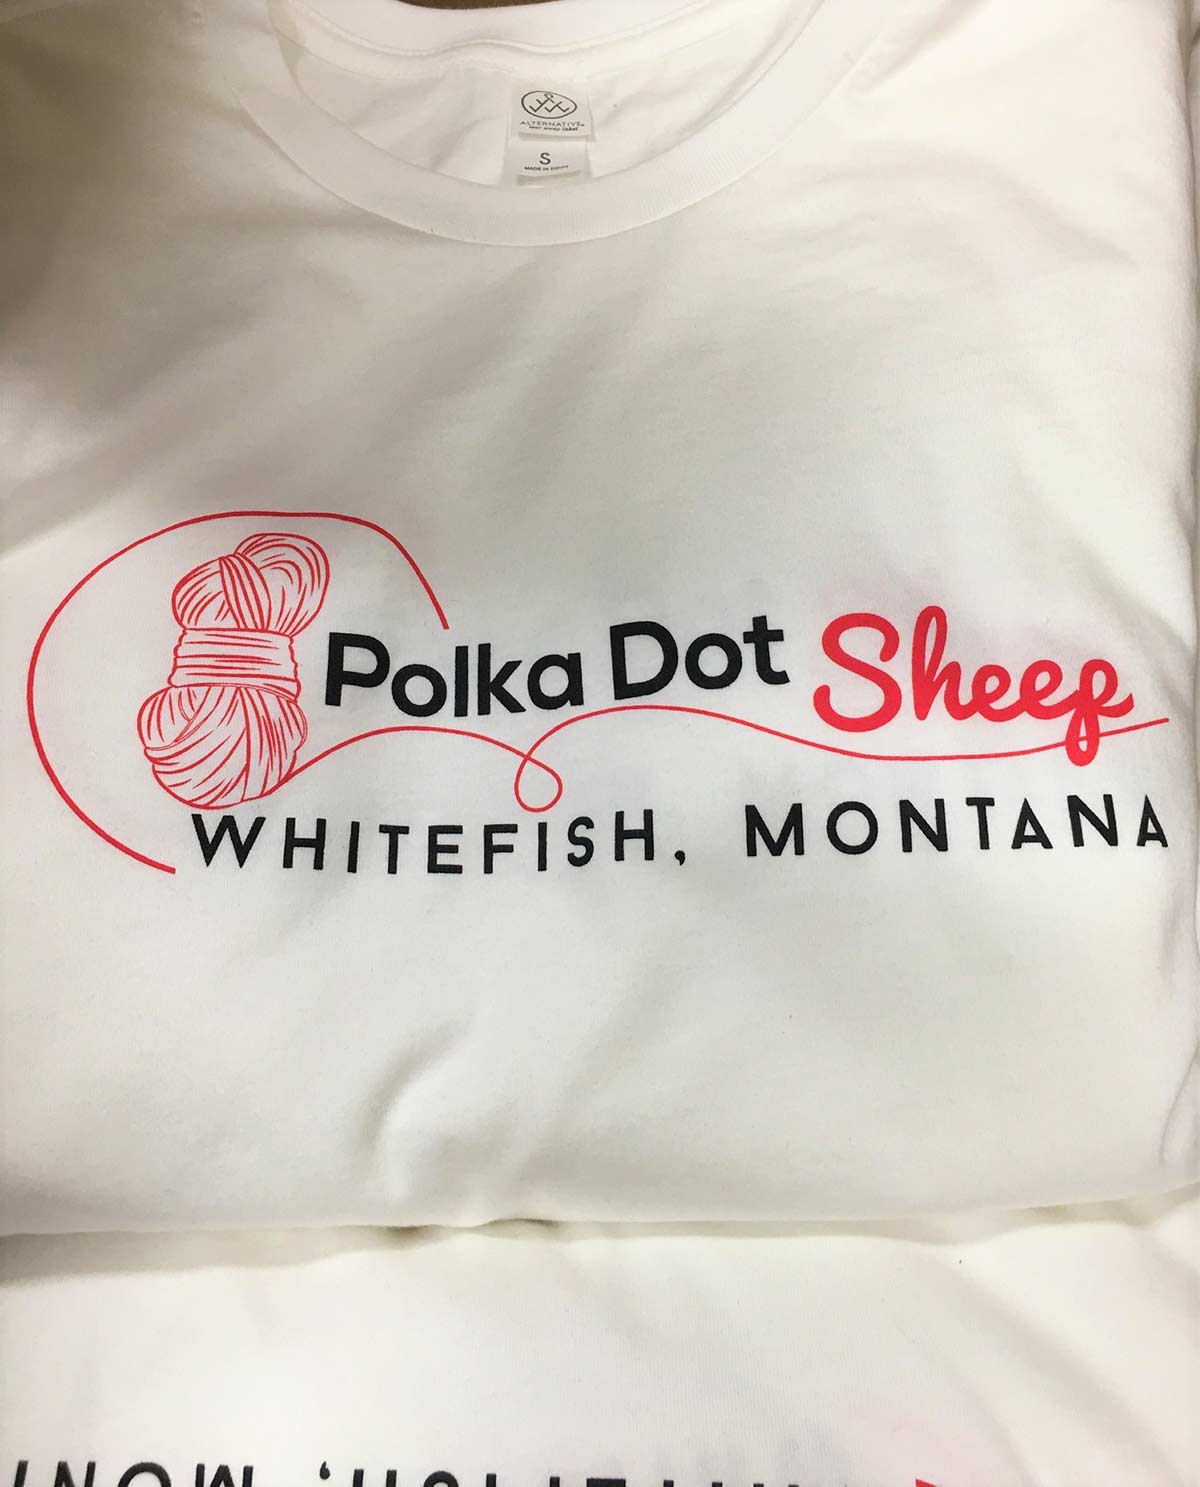 Whitefish Montana Polka Dot Sheep shirts